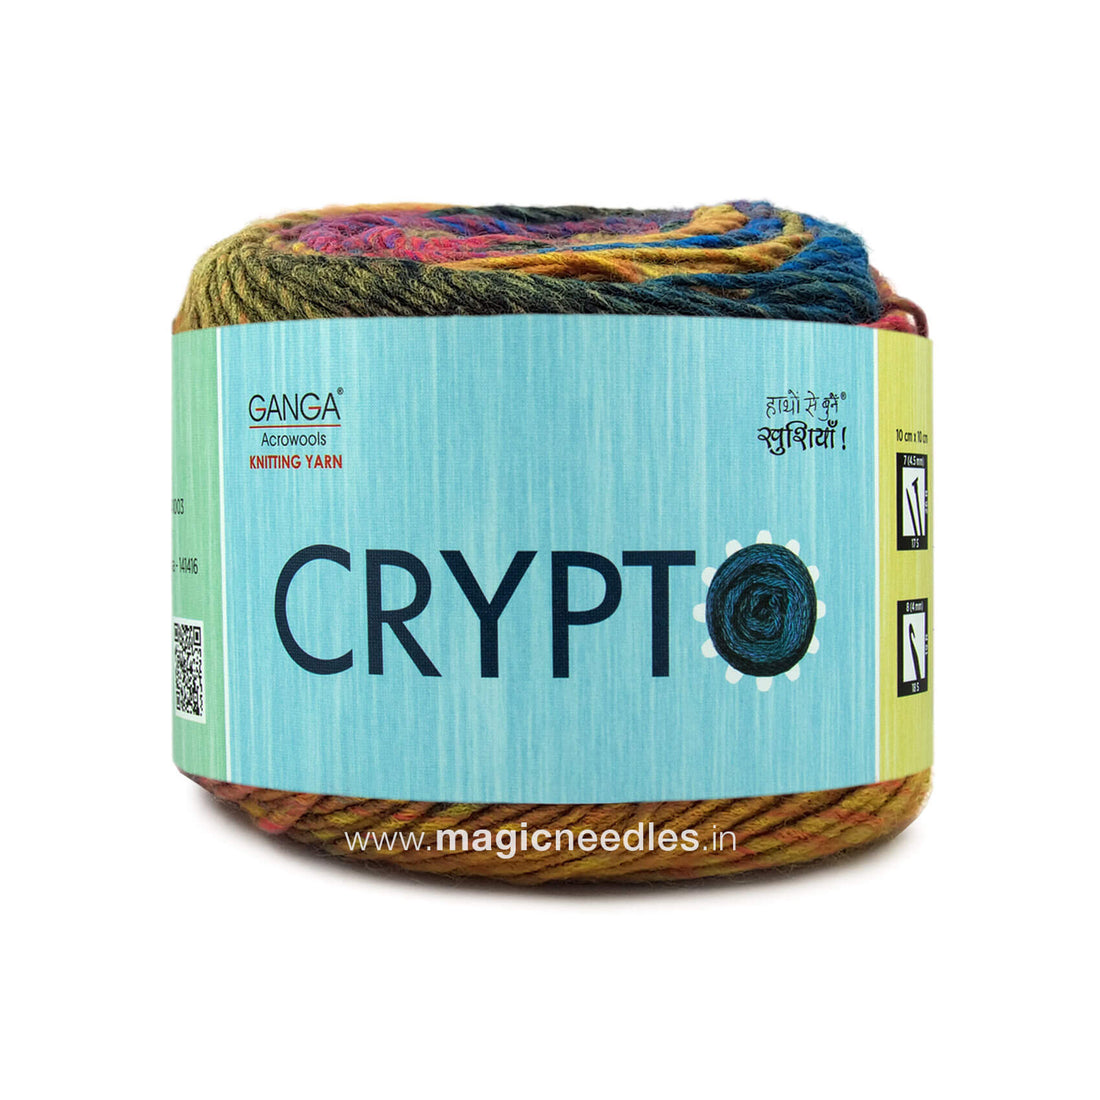 Ganga Crypto Yarn - PTT1920